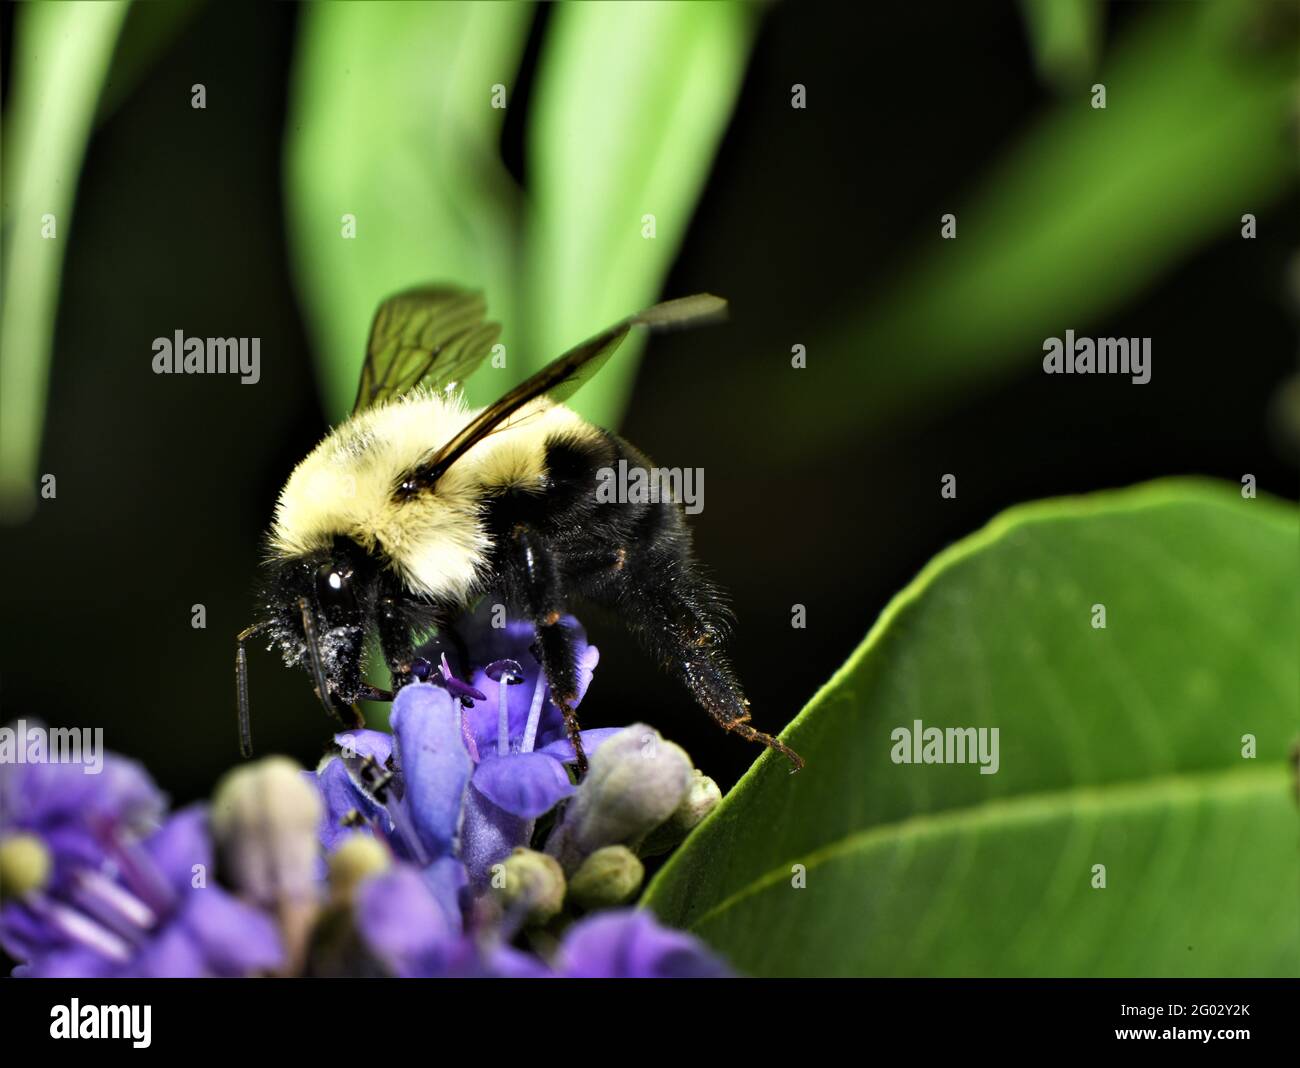 Bumblebee on wisteria. Stock Photo